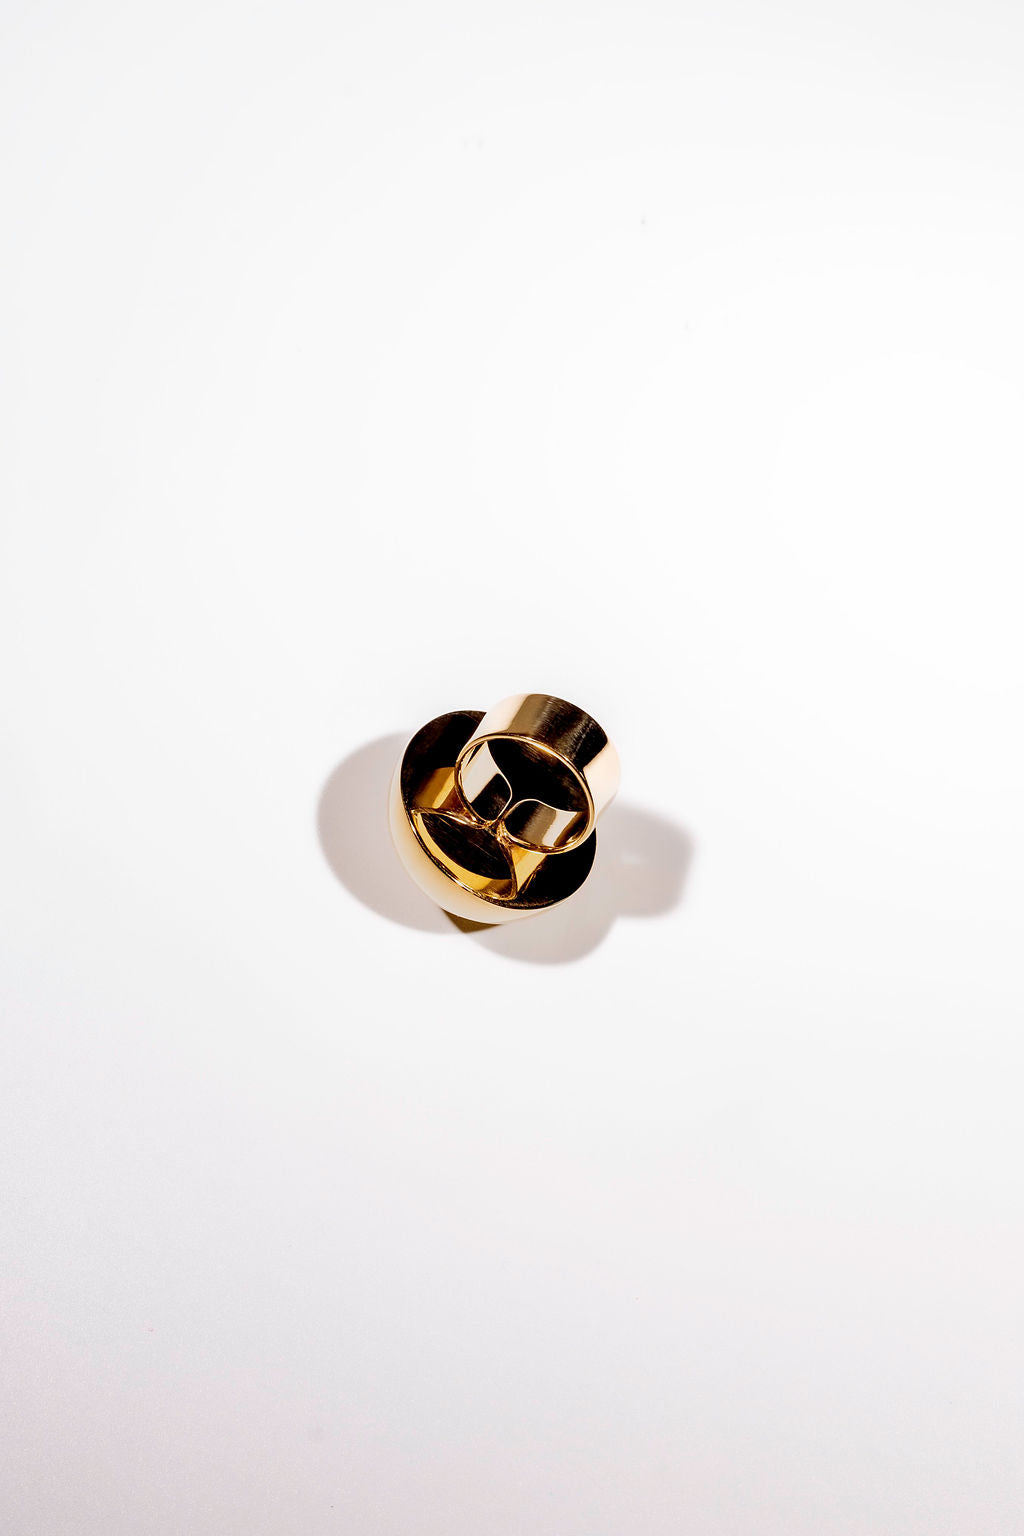 Sphere ring - Shantall Lacayo